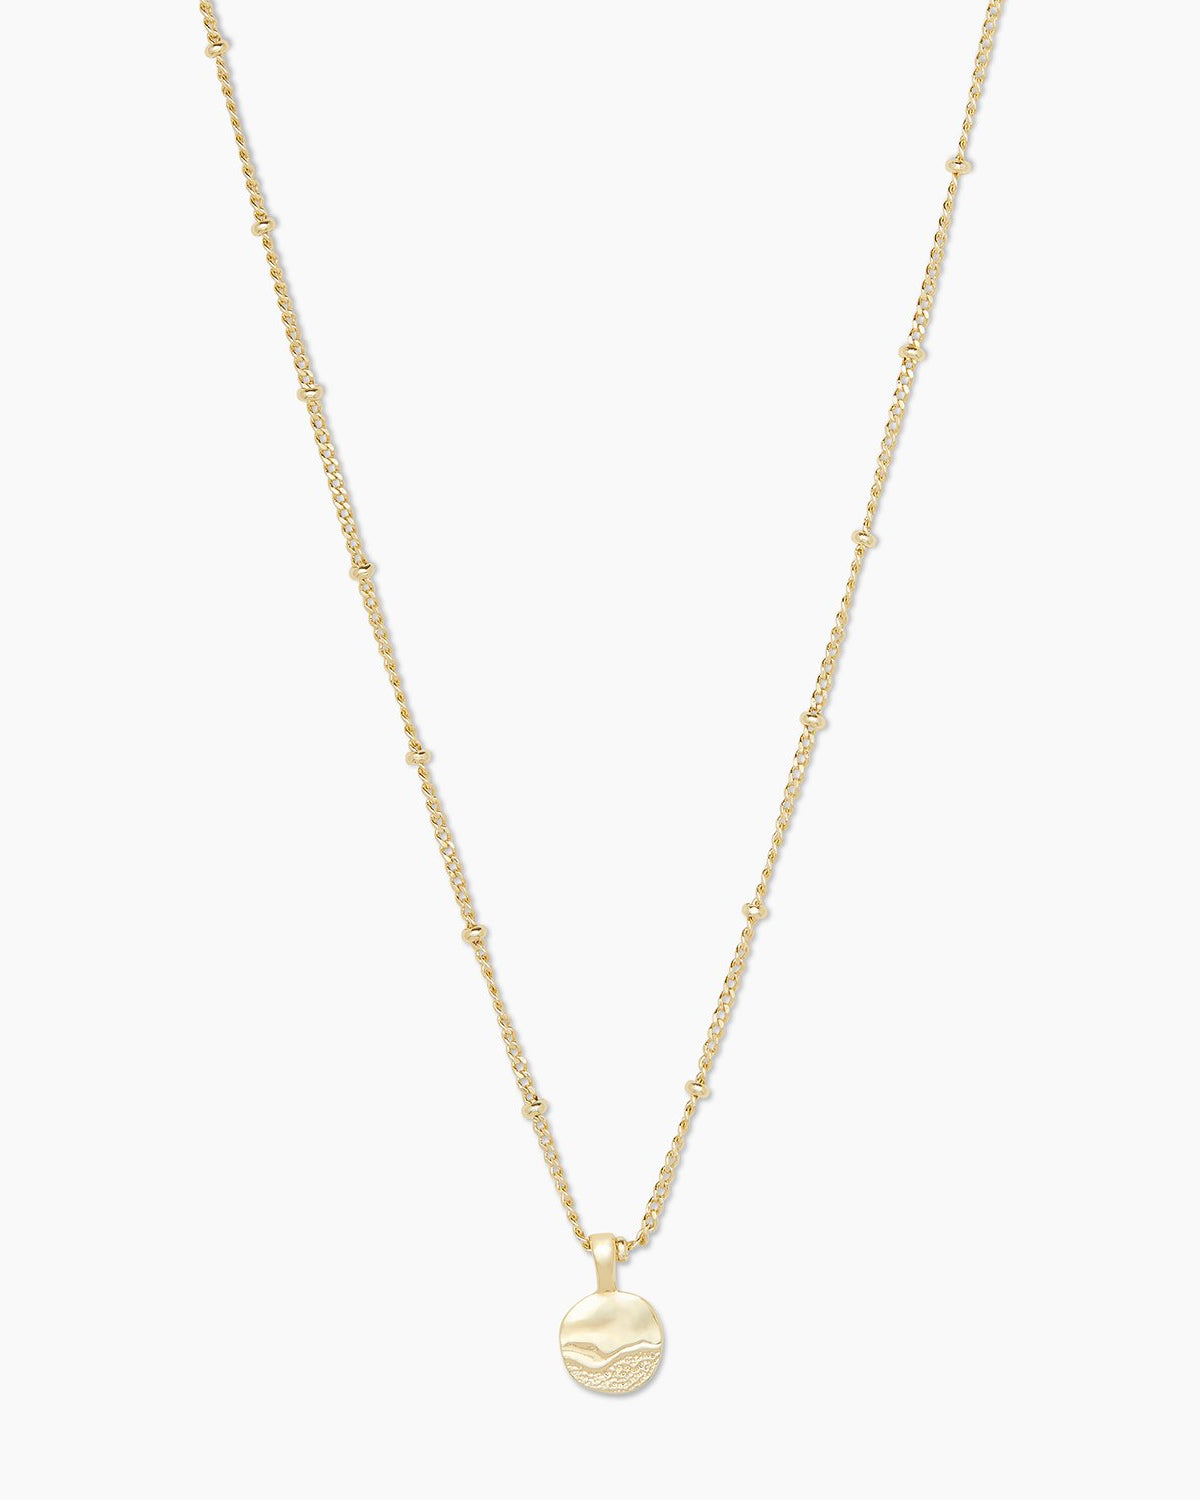 Shorebreak Necklace (gold).